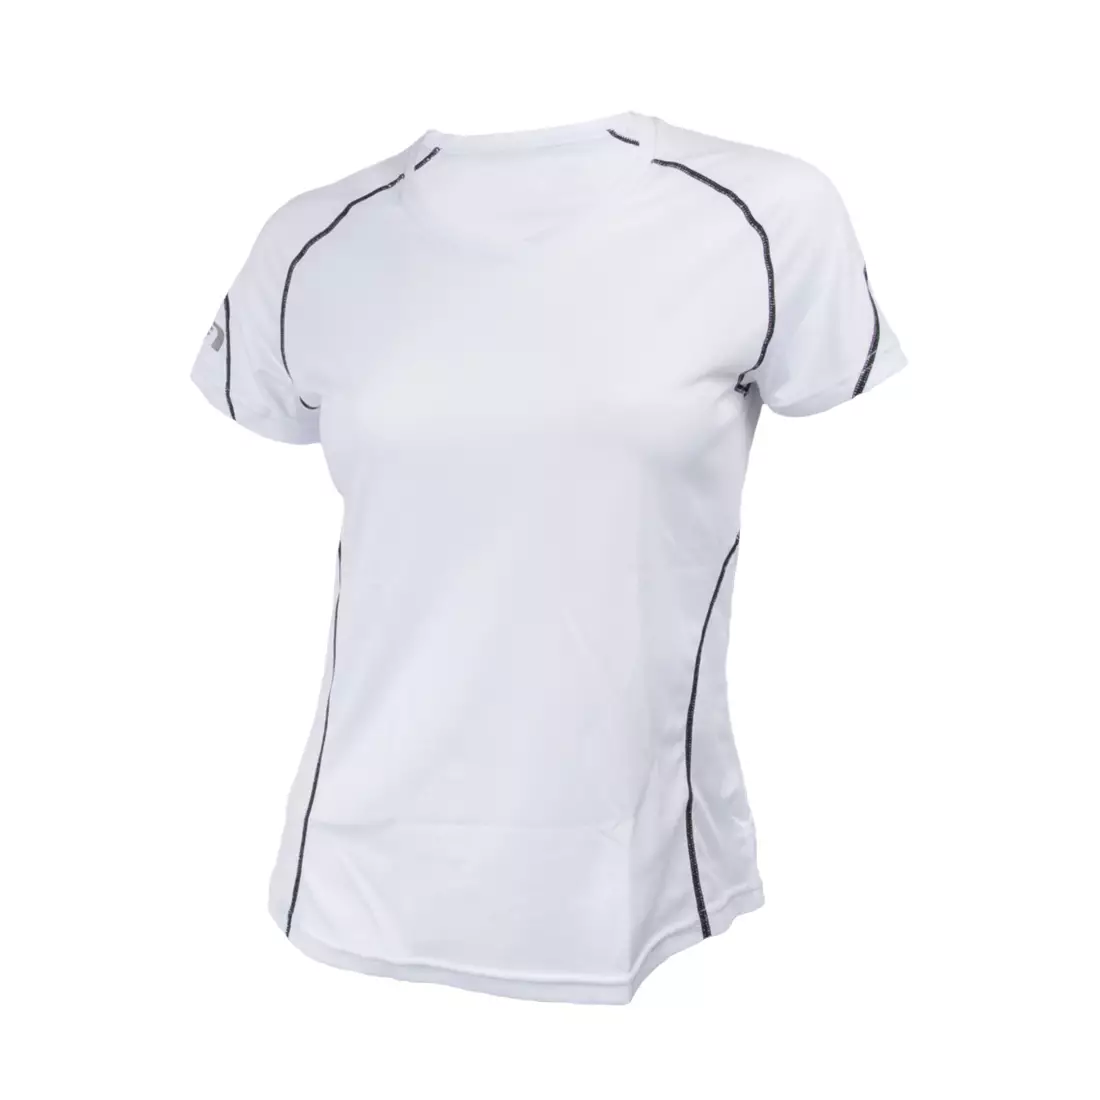 NEWLINE COOLMAX TEE - Damen-Lauf-T-Shirt 13613-020